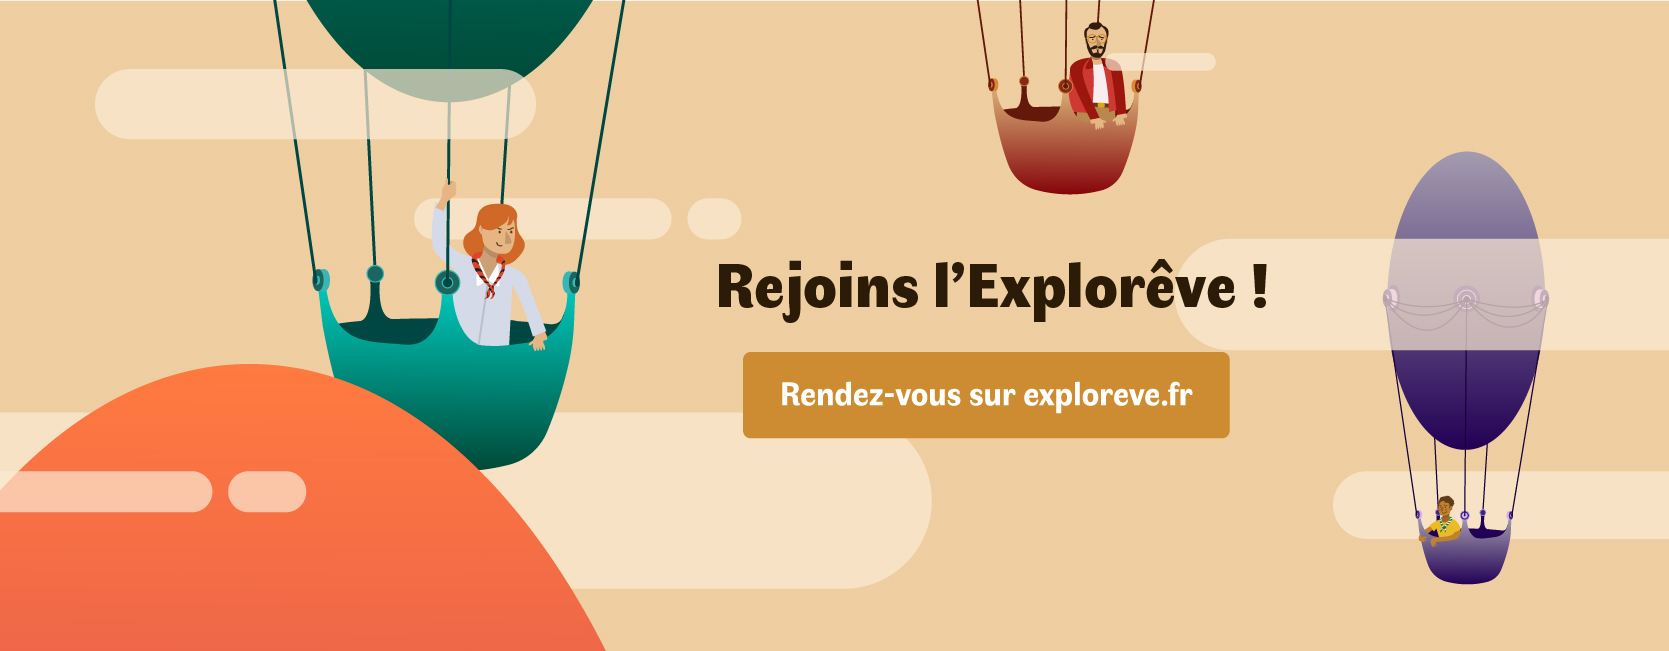 Rejoignez Exploreve.fr